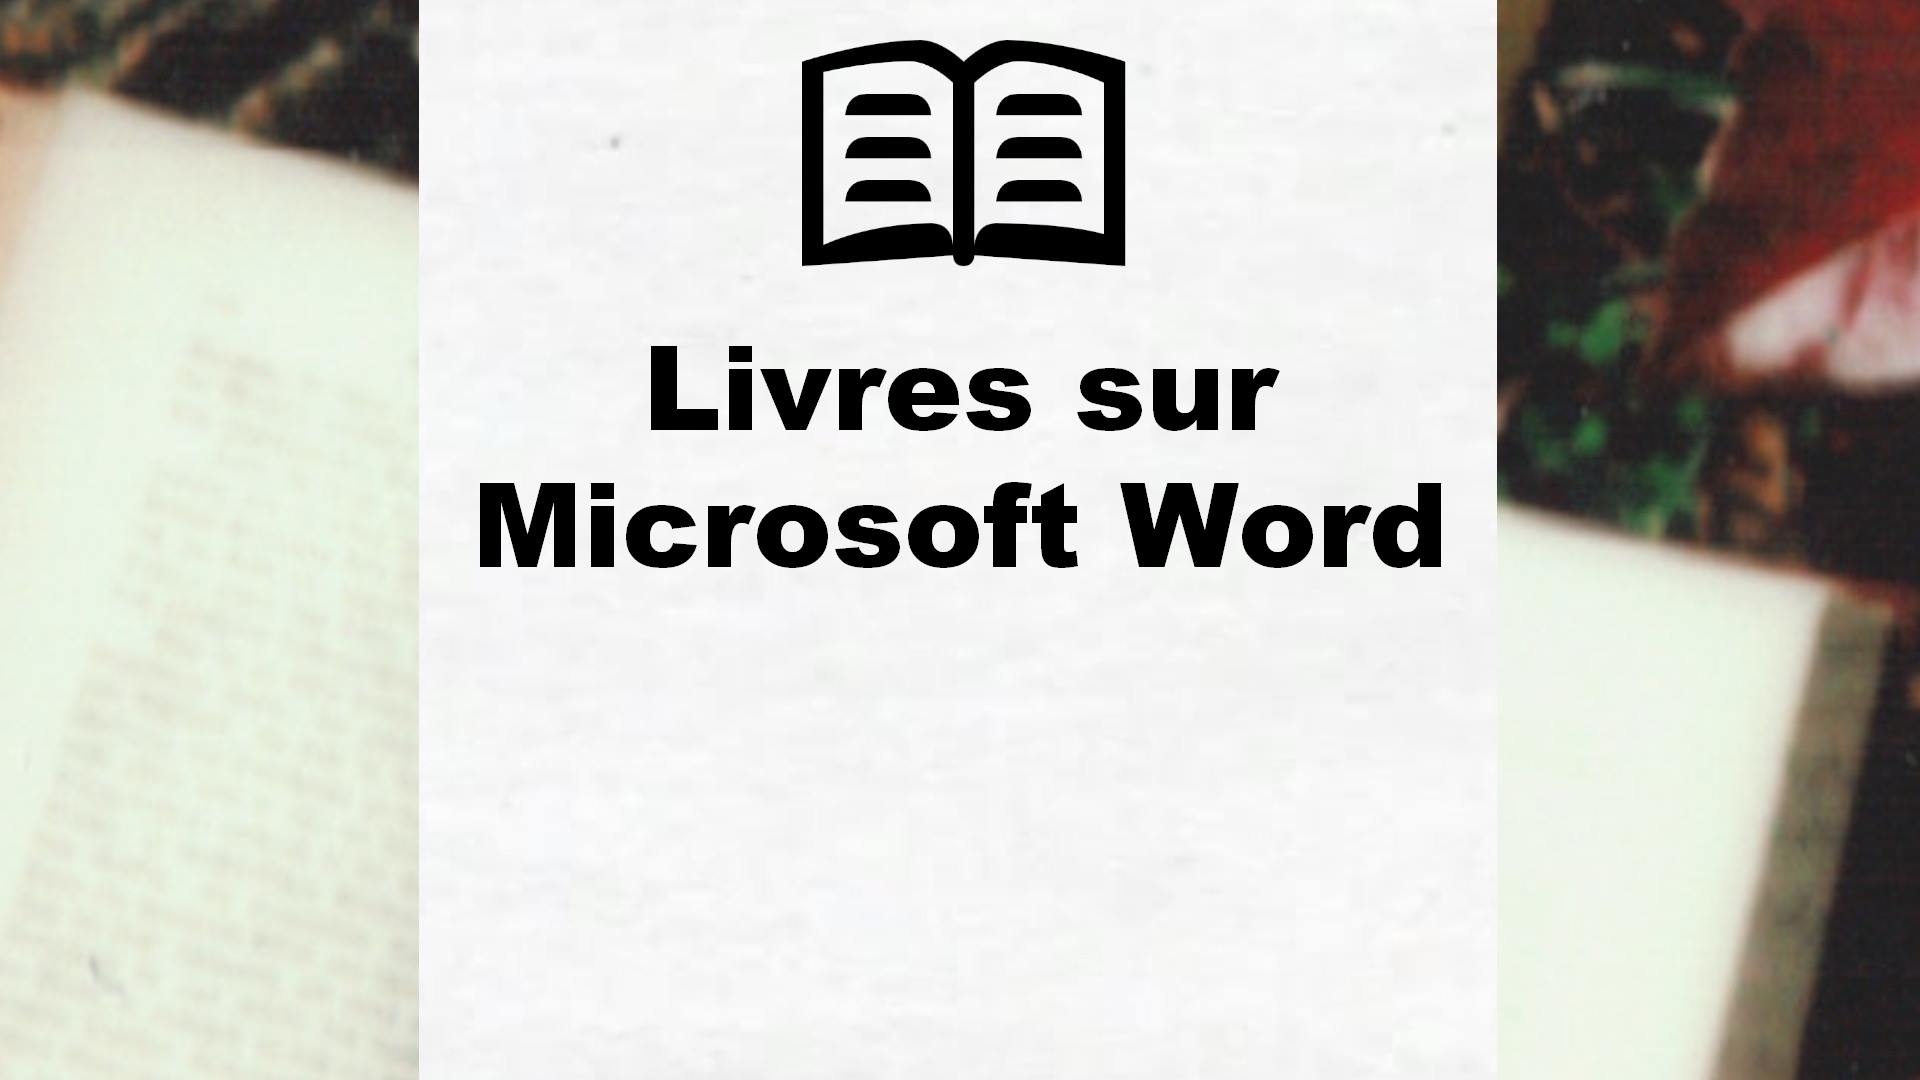 Livres sur Microsoft Word